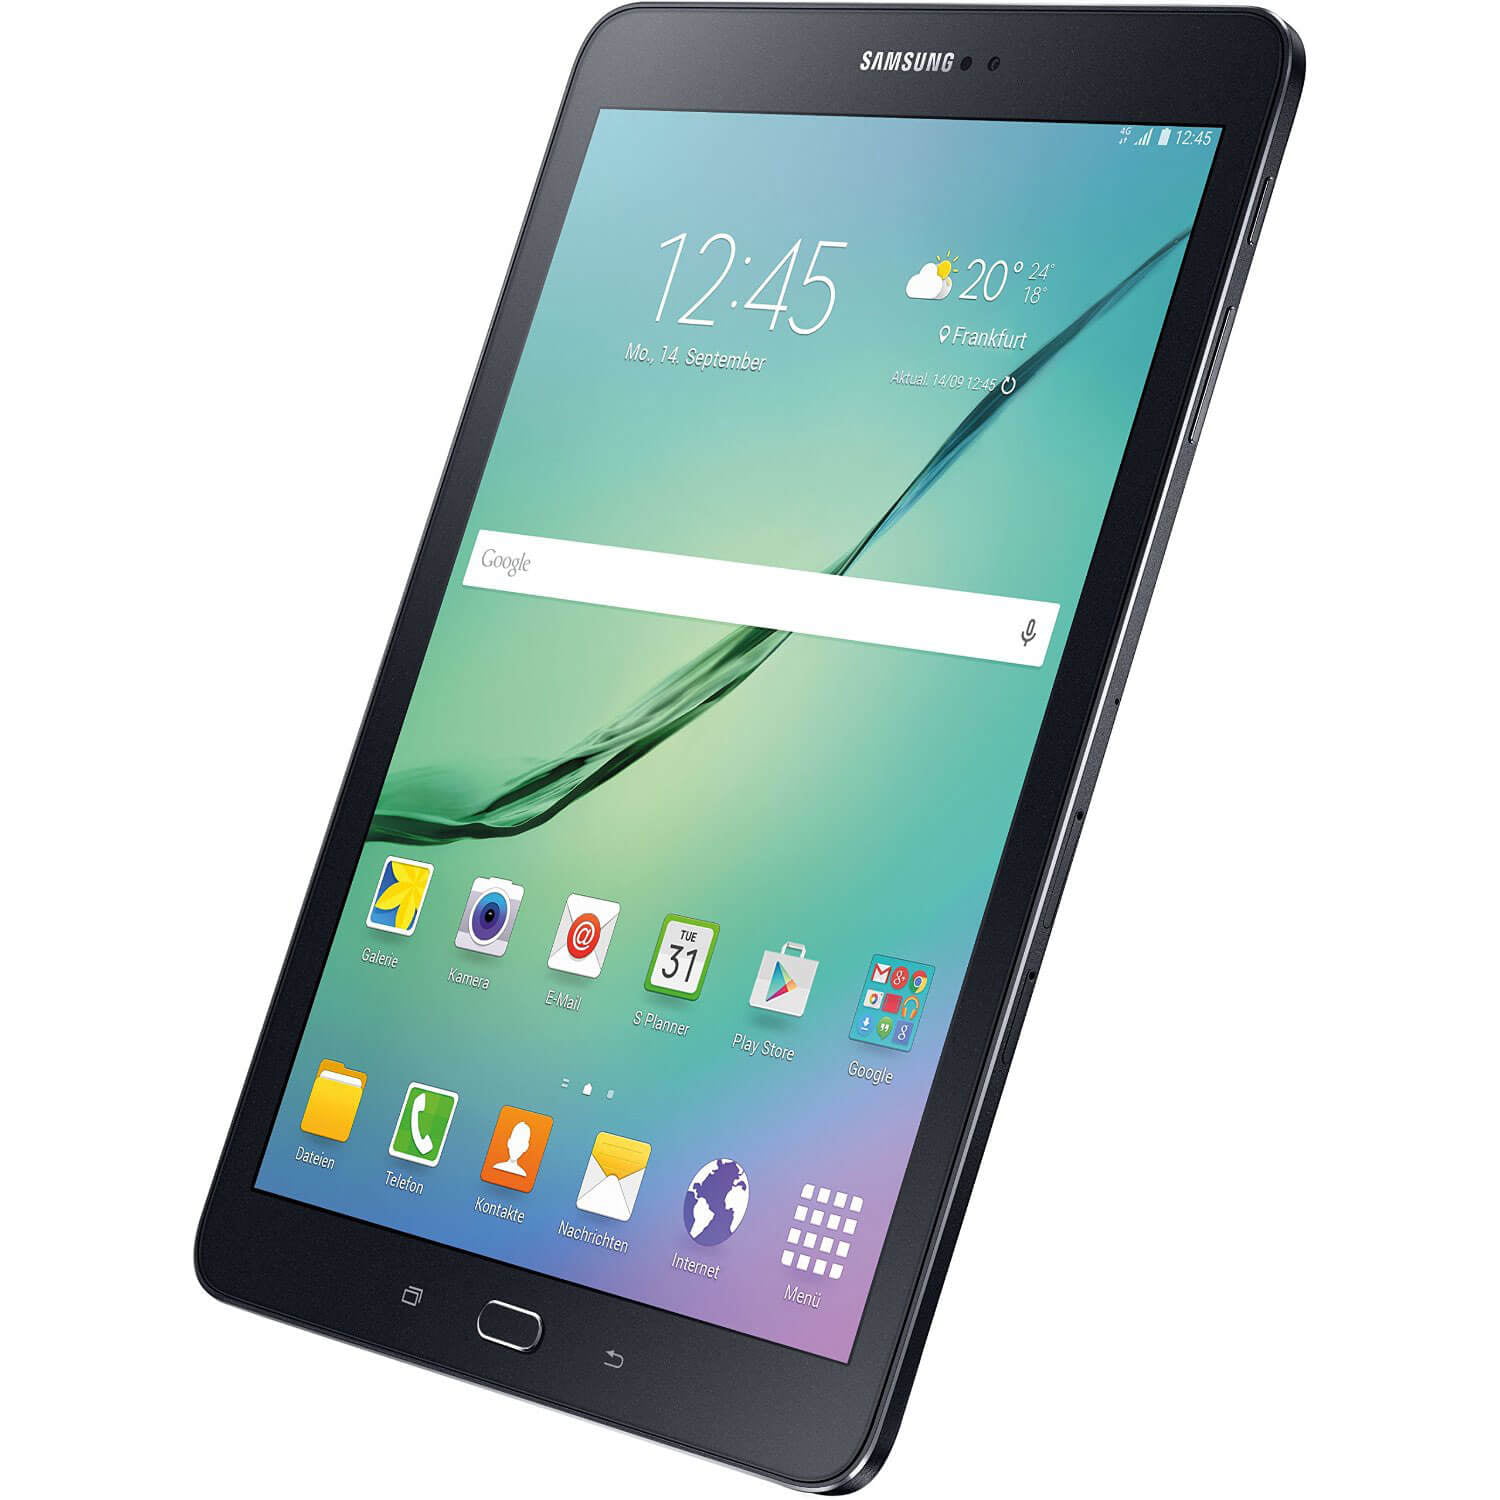 overschot bronzen Cilia Samsung Galaxy Tab S2 9.7" 32GB Tablet - Android 5.0 - Walmart.com